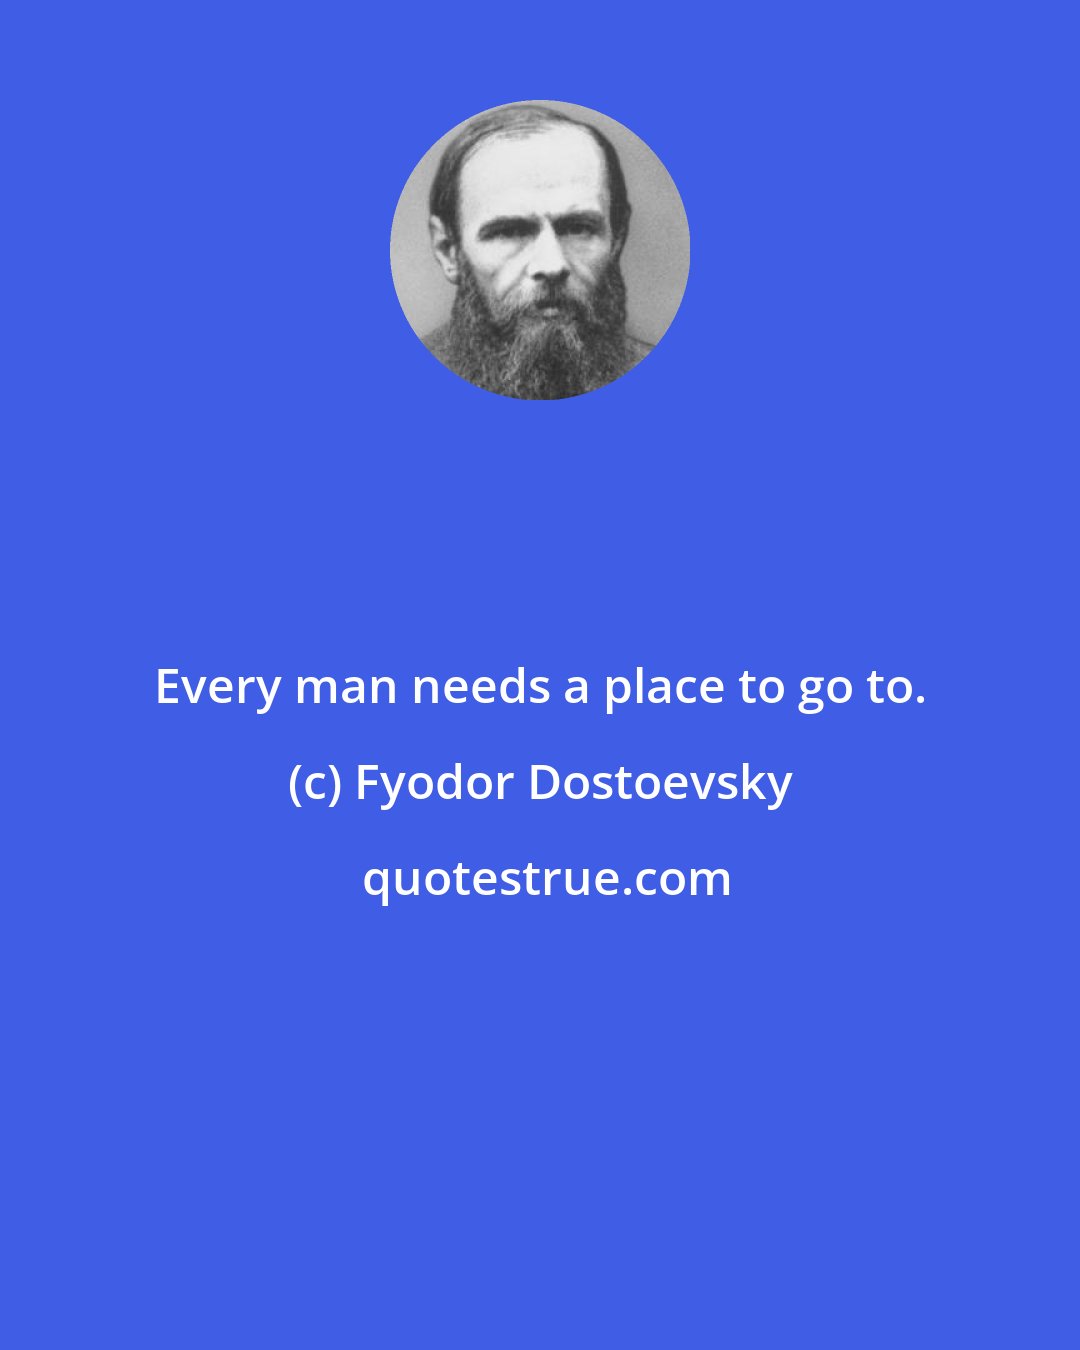 Fyodor Dostoevsky: Every man needs a place to go to.